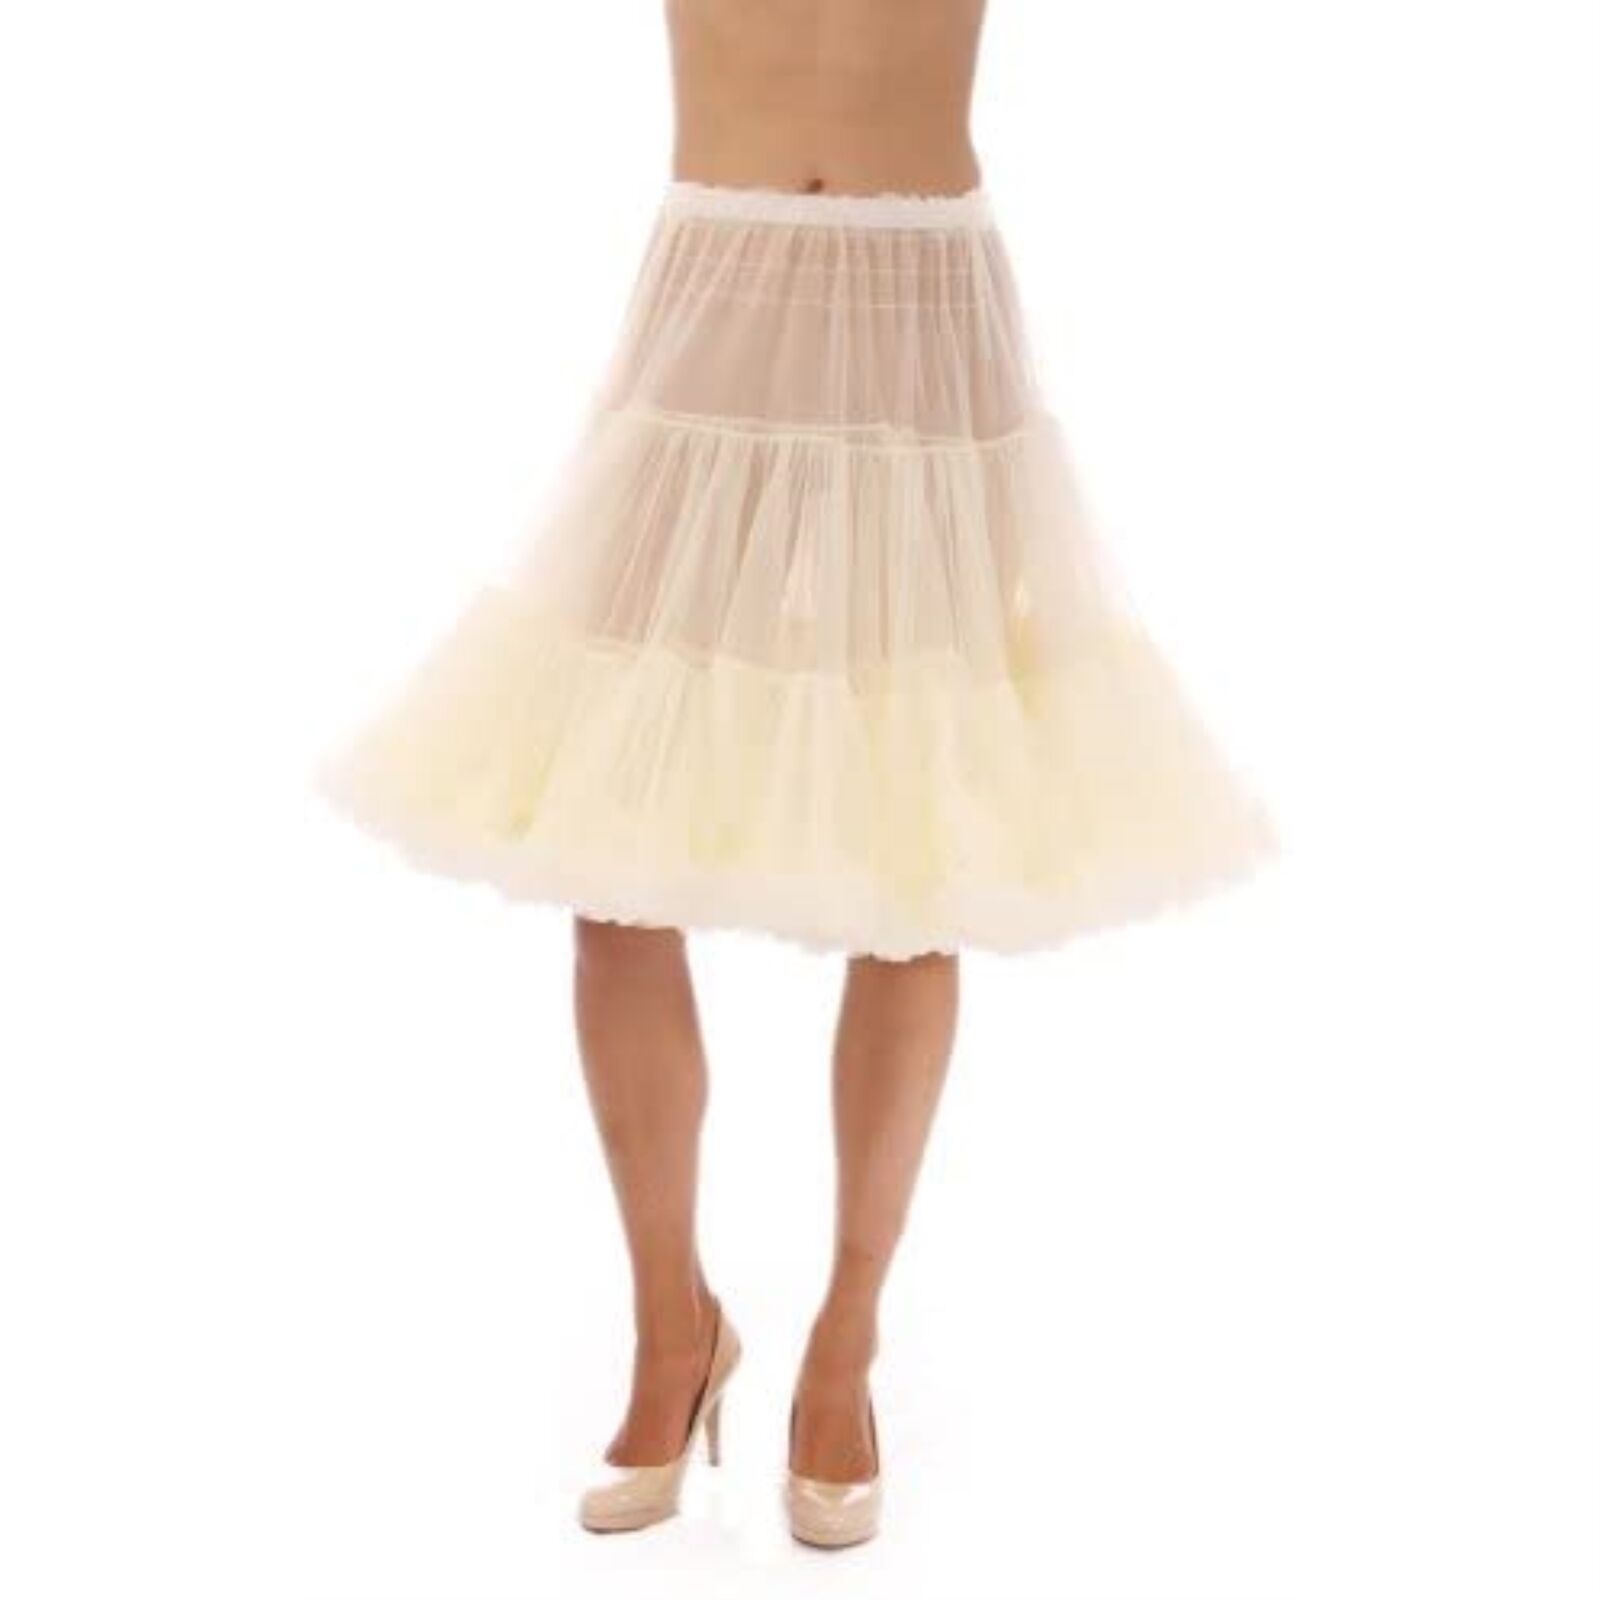 Malco Modes Vintage Crinoline Petticoat Skirt - Knee-length , Size: Large, Co...